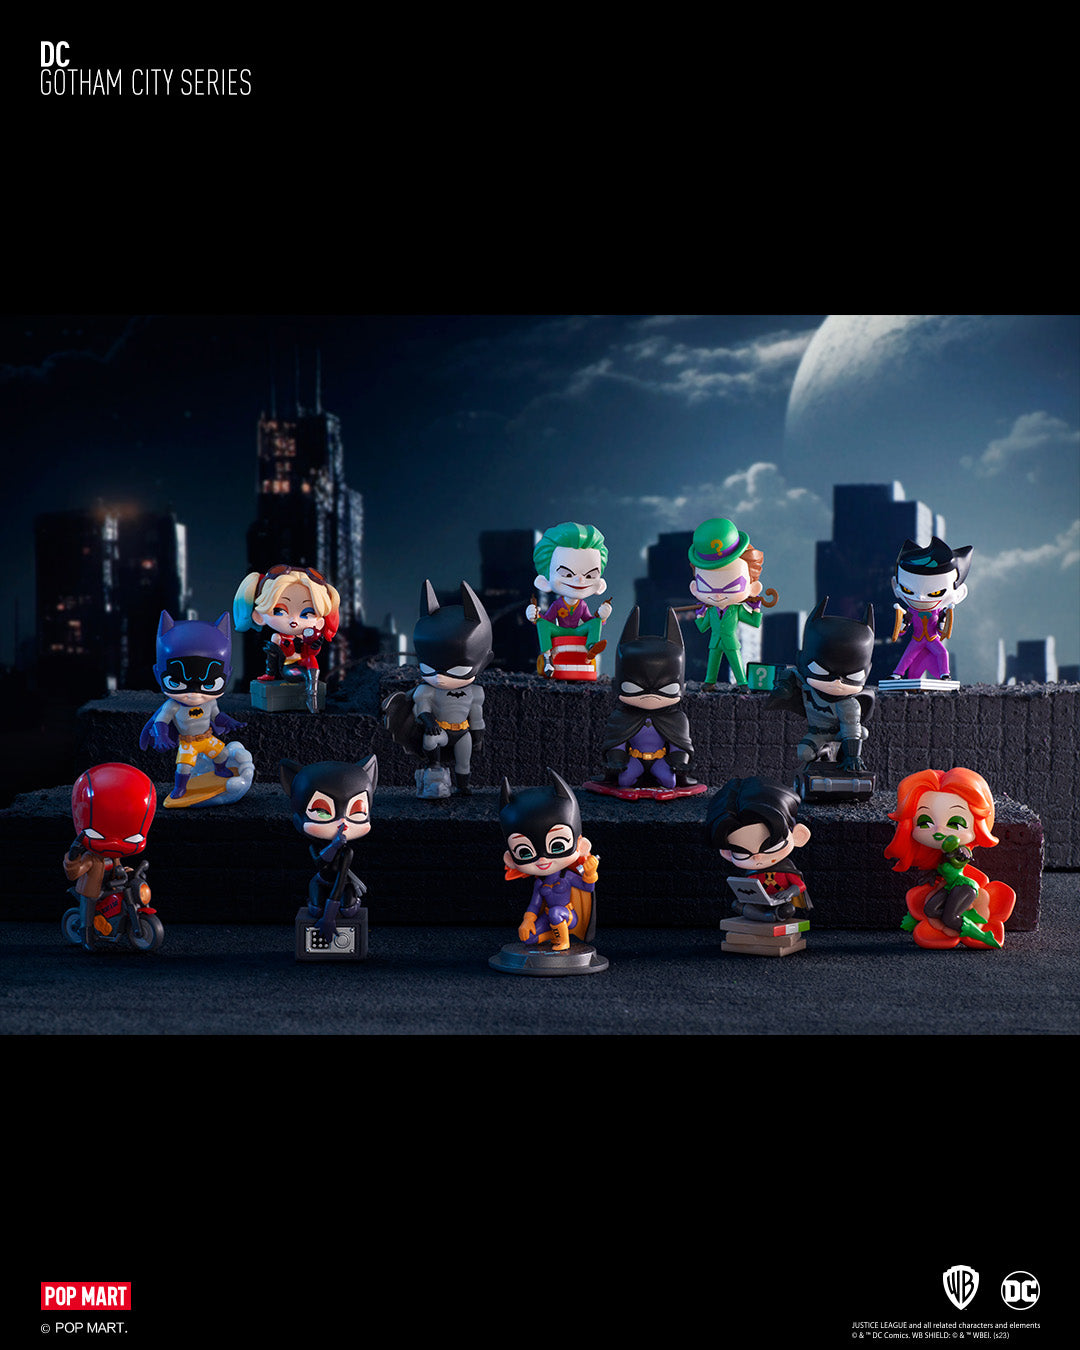 DC Gotham City Series [whole set]